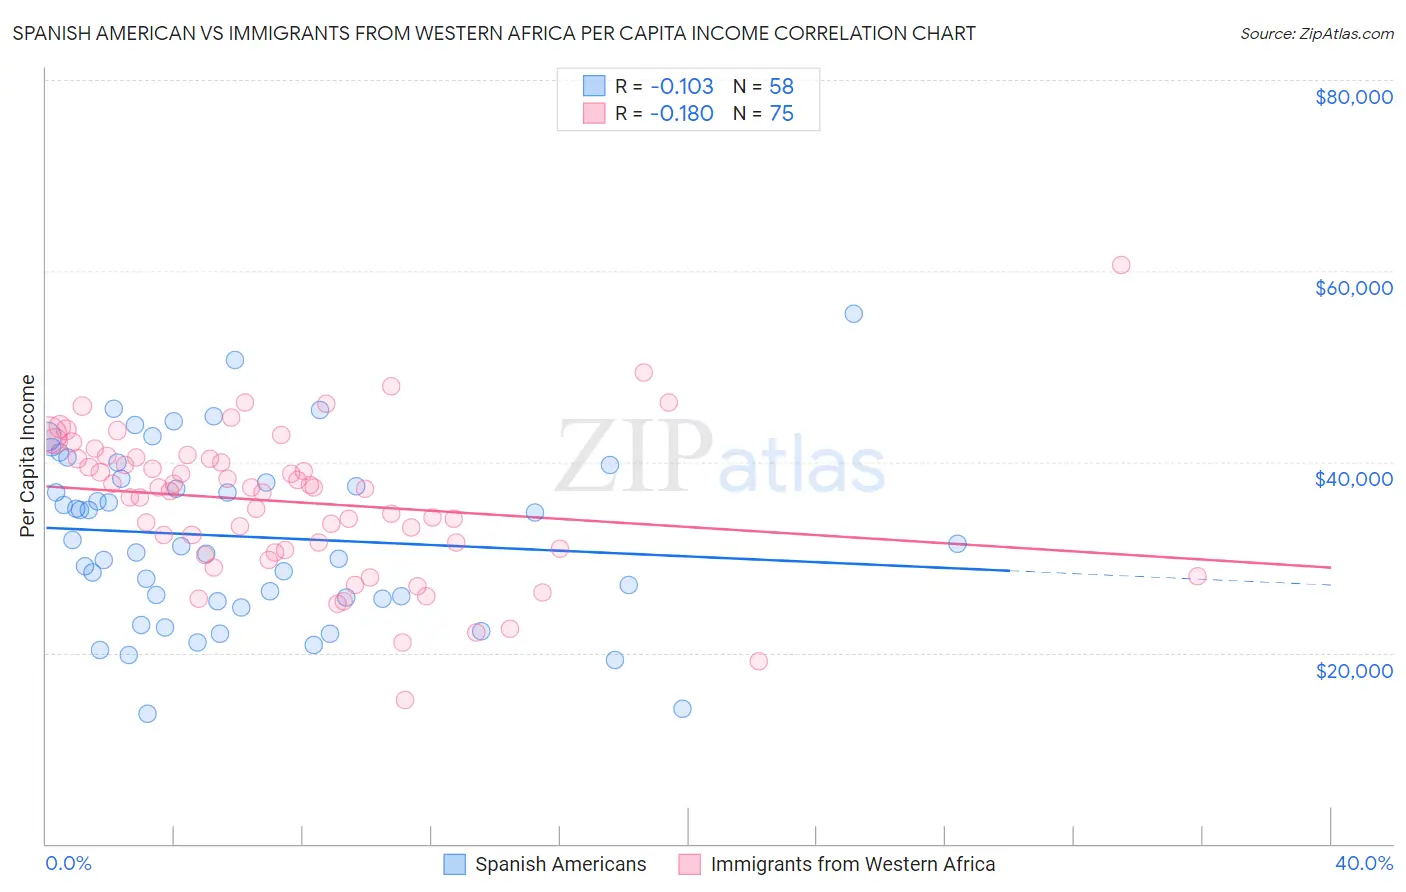 Spanish American vs Immigrants from Western Africa Per Capita Income